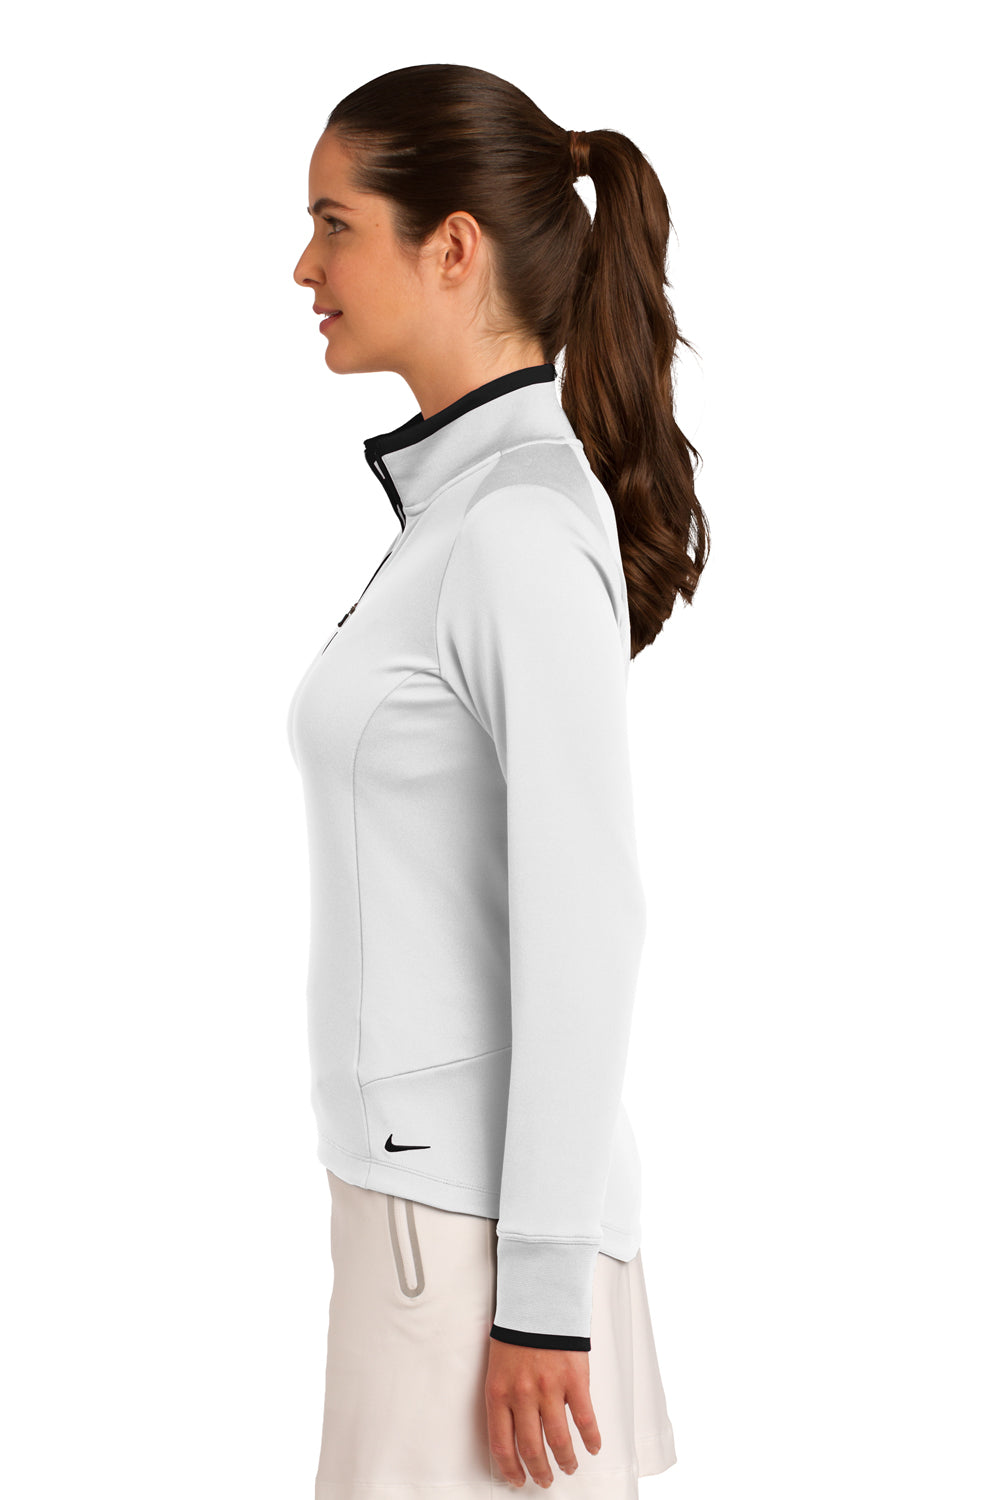 Nike 578674 Womens Dri-Fit Moisture Wicking 1/4 Zip Sweatshirt White/Black Model Side